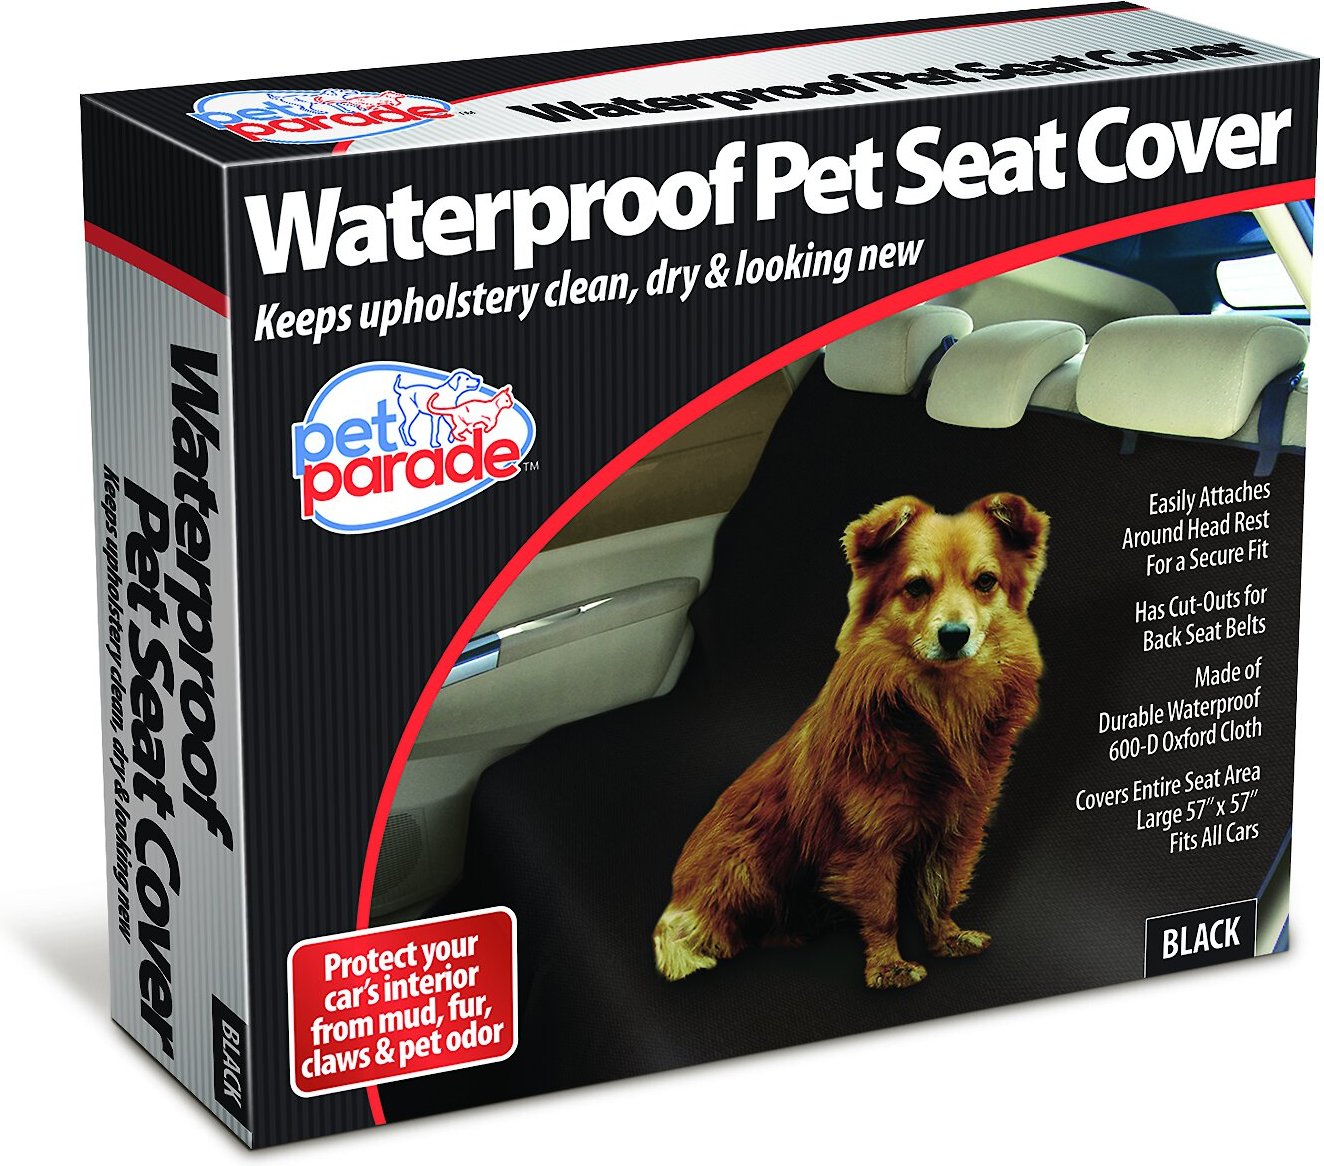 Pet Parade Waterproof Pet Seat Cover